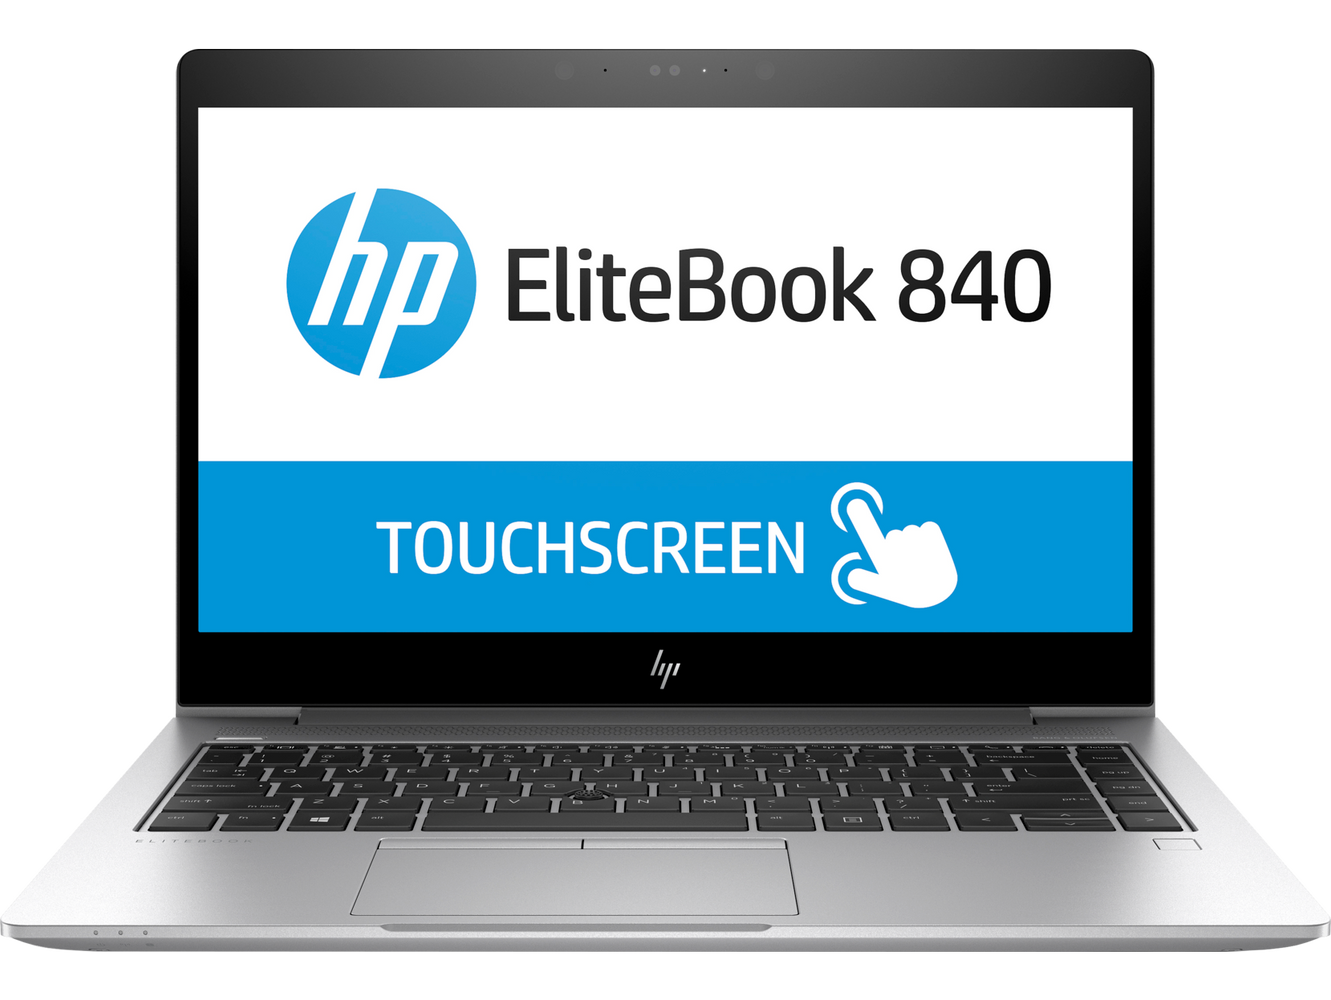 HP ELITEBOOK 840 G5 CORE I5- 8250U 1.60-3.40 GHZ/8GB/ SSD 256GB /NO DVD/ 14 LED HD/ WIN 10PRO/ 1-1-0 2TB EN NUBE - ABD Systems